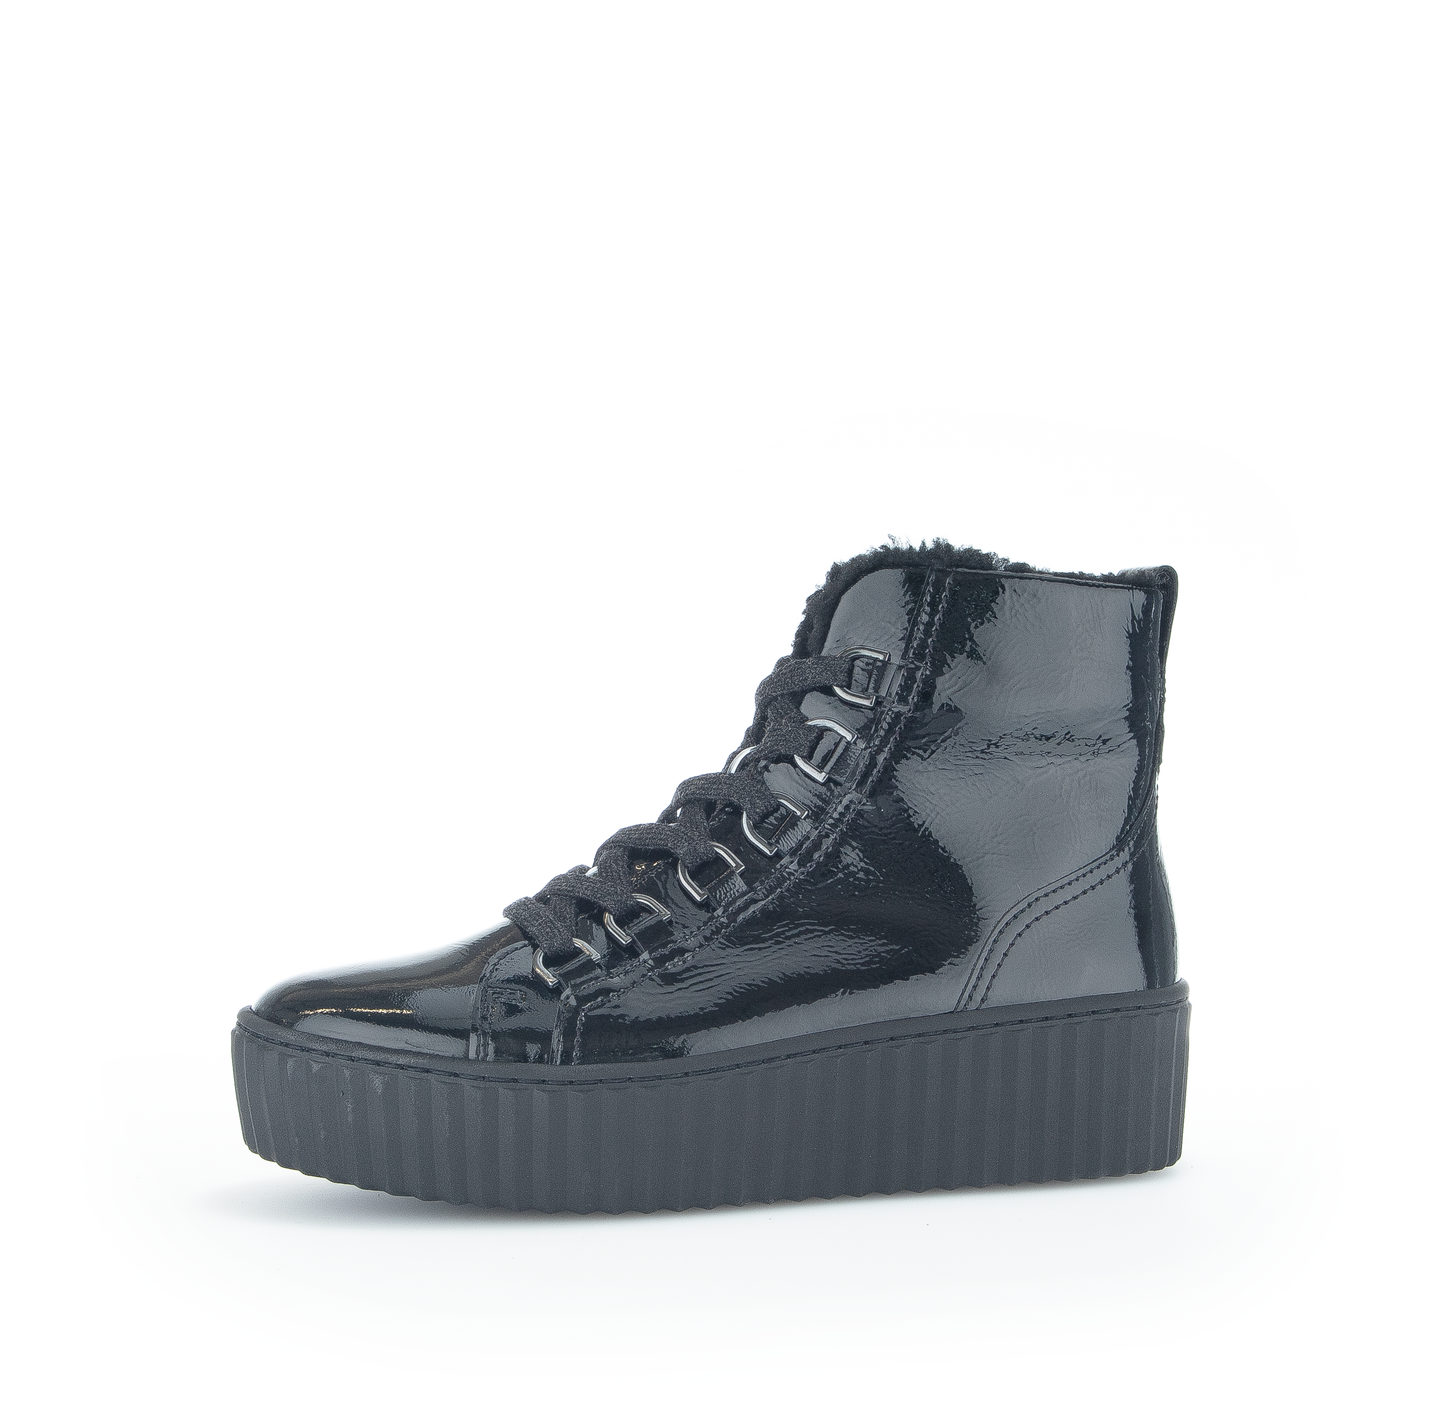 Gabor 93.713.70 Black Patent High Top Sneakers